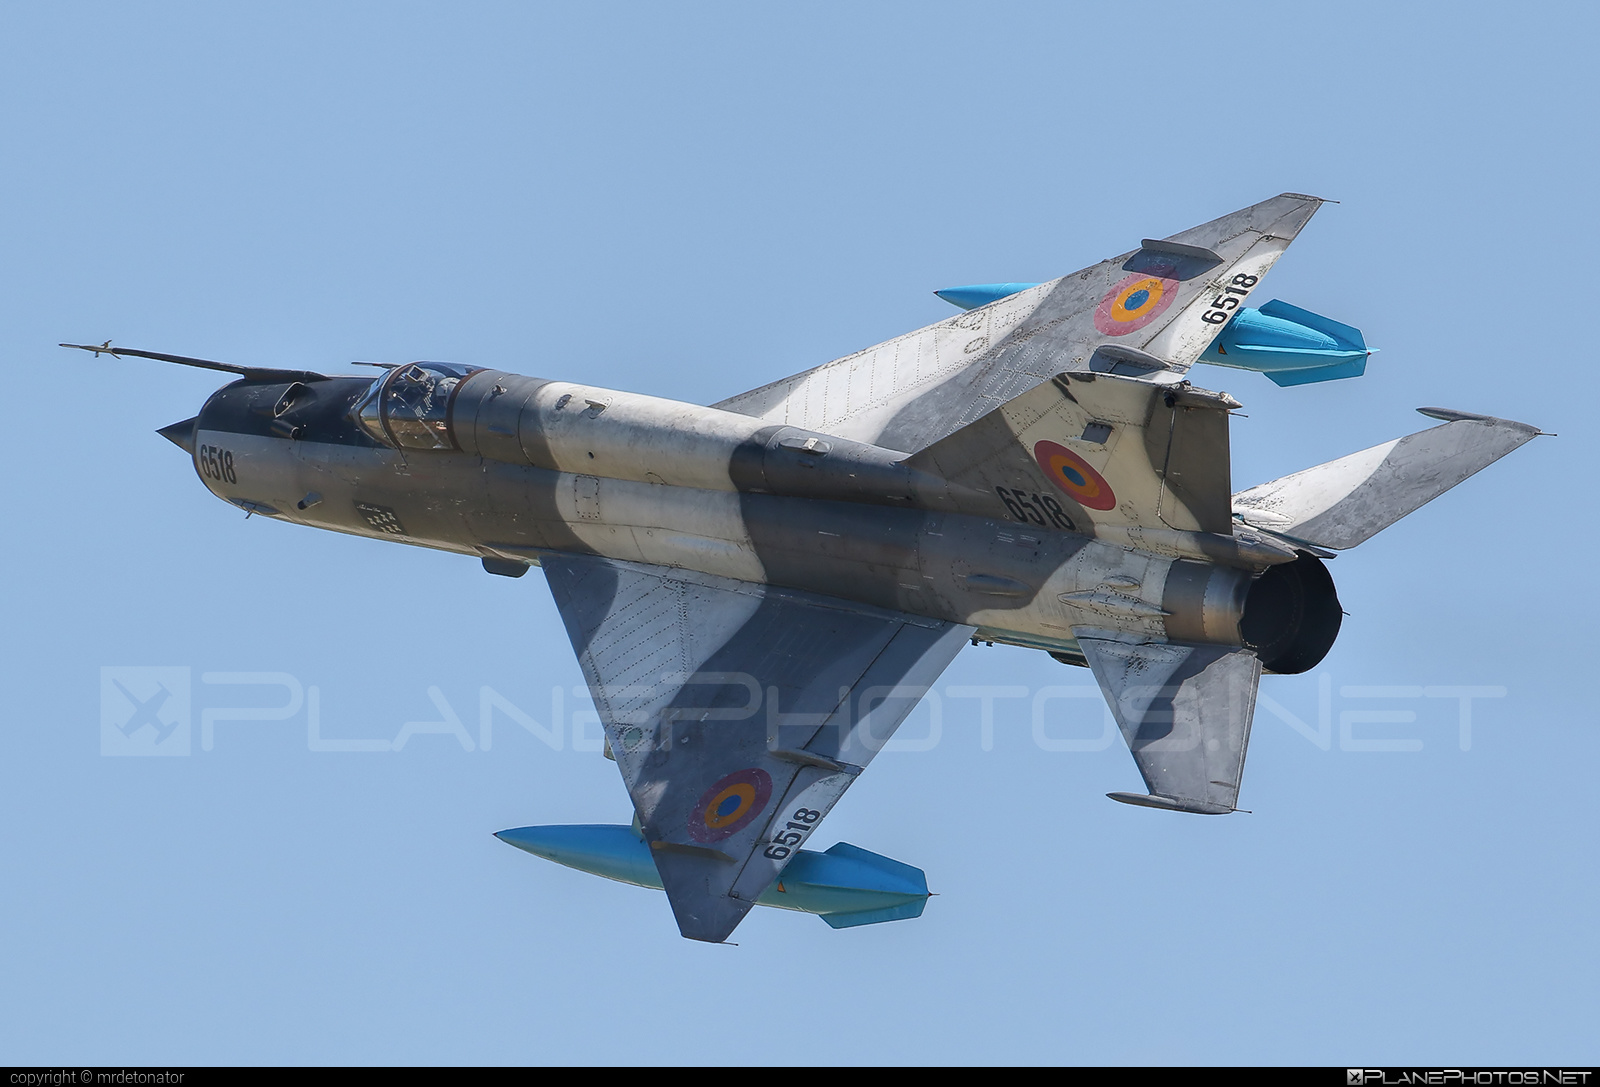 Mikoyan-Gurevich MiG-21MF - 6518 operated by Forţele Aeriene Române (Romanian Air Force) #forteleaerieneromane #mig #mig21 #mig21mf #mikoyangurevich #romanianairforce